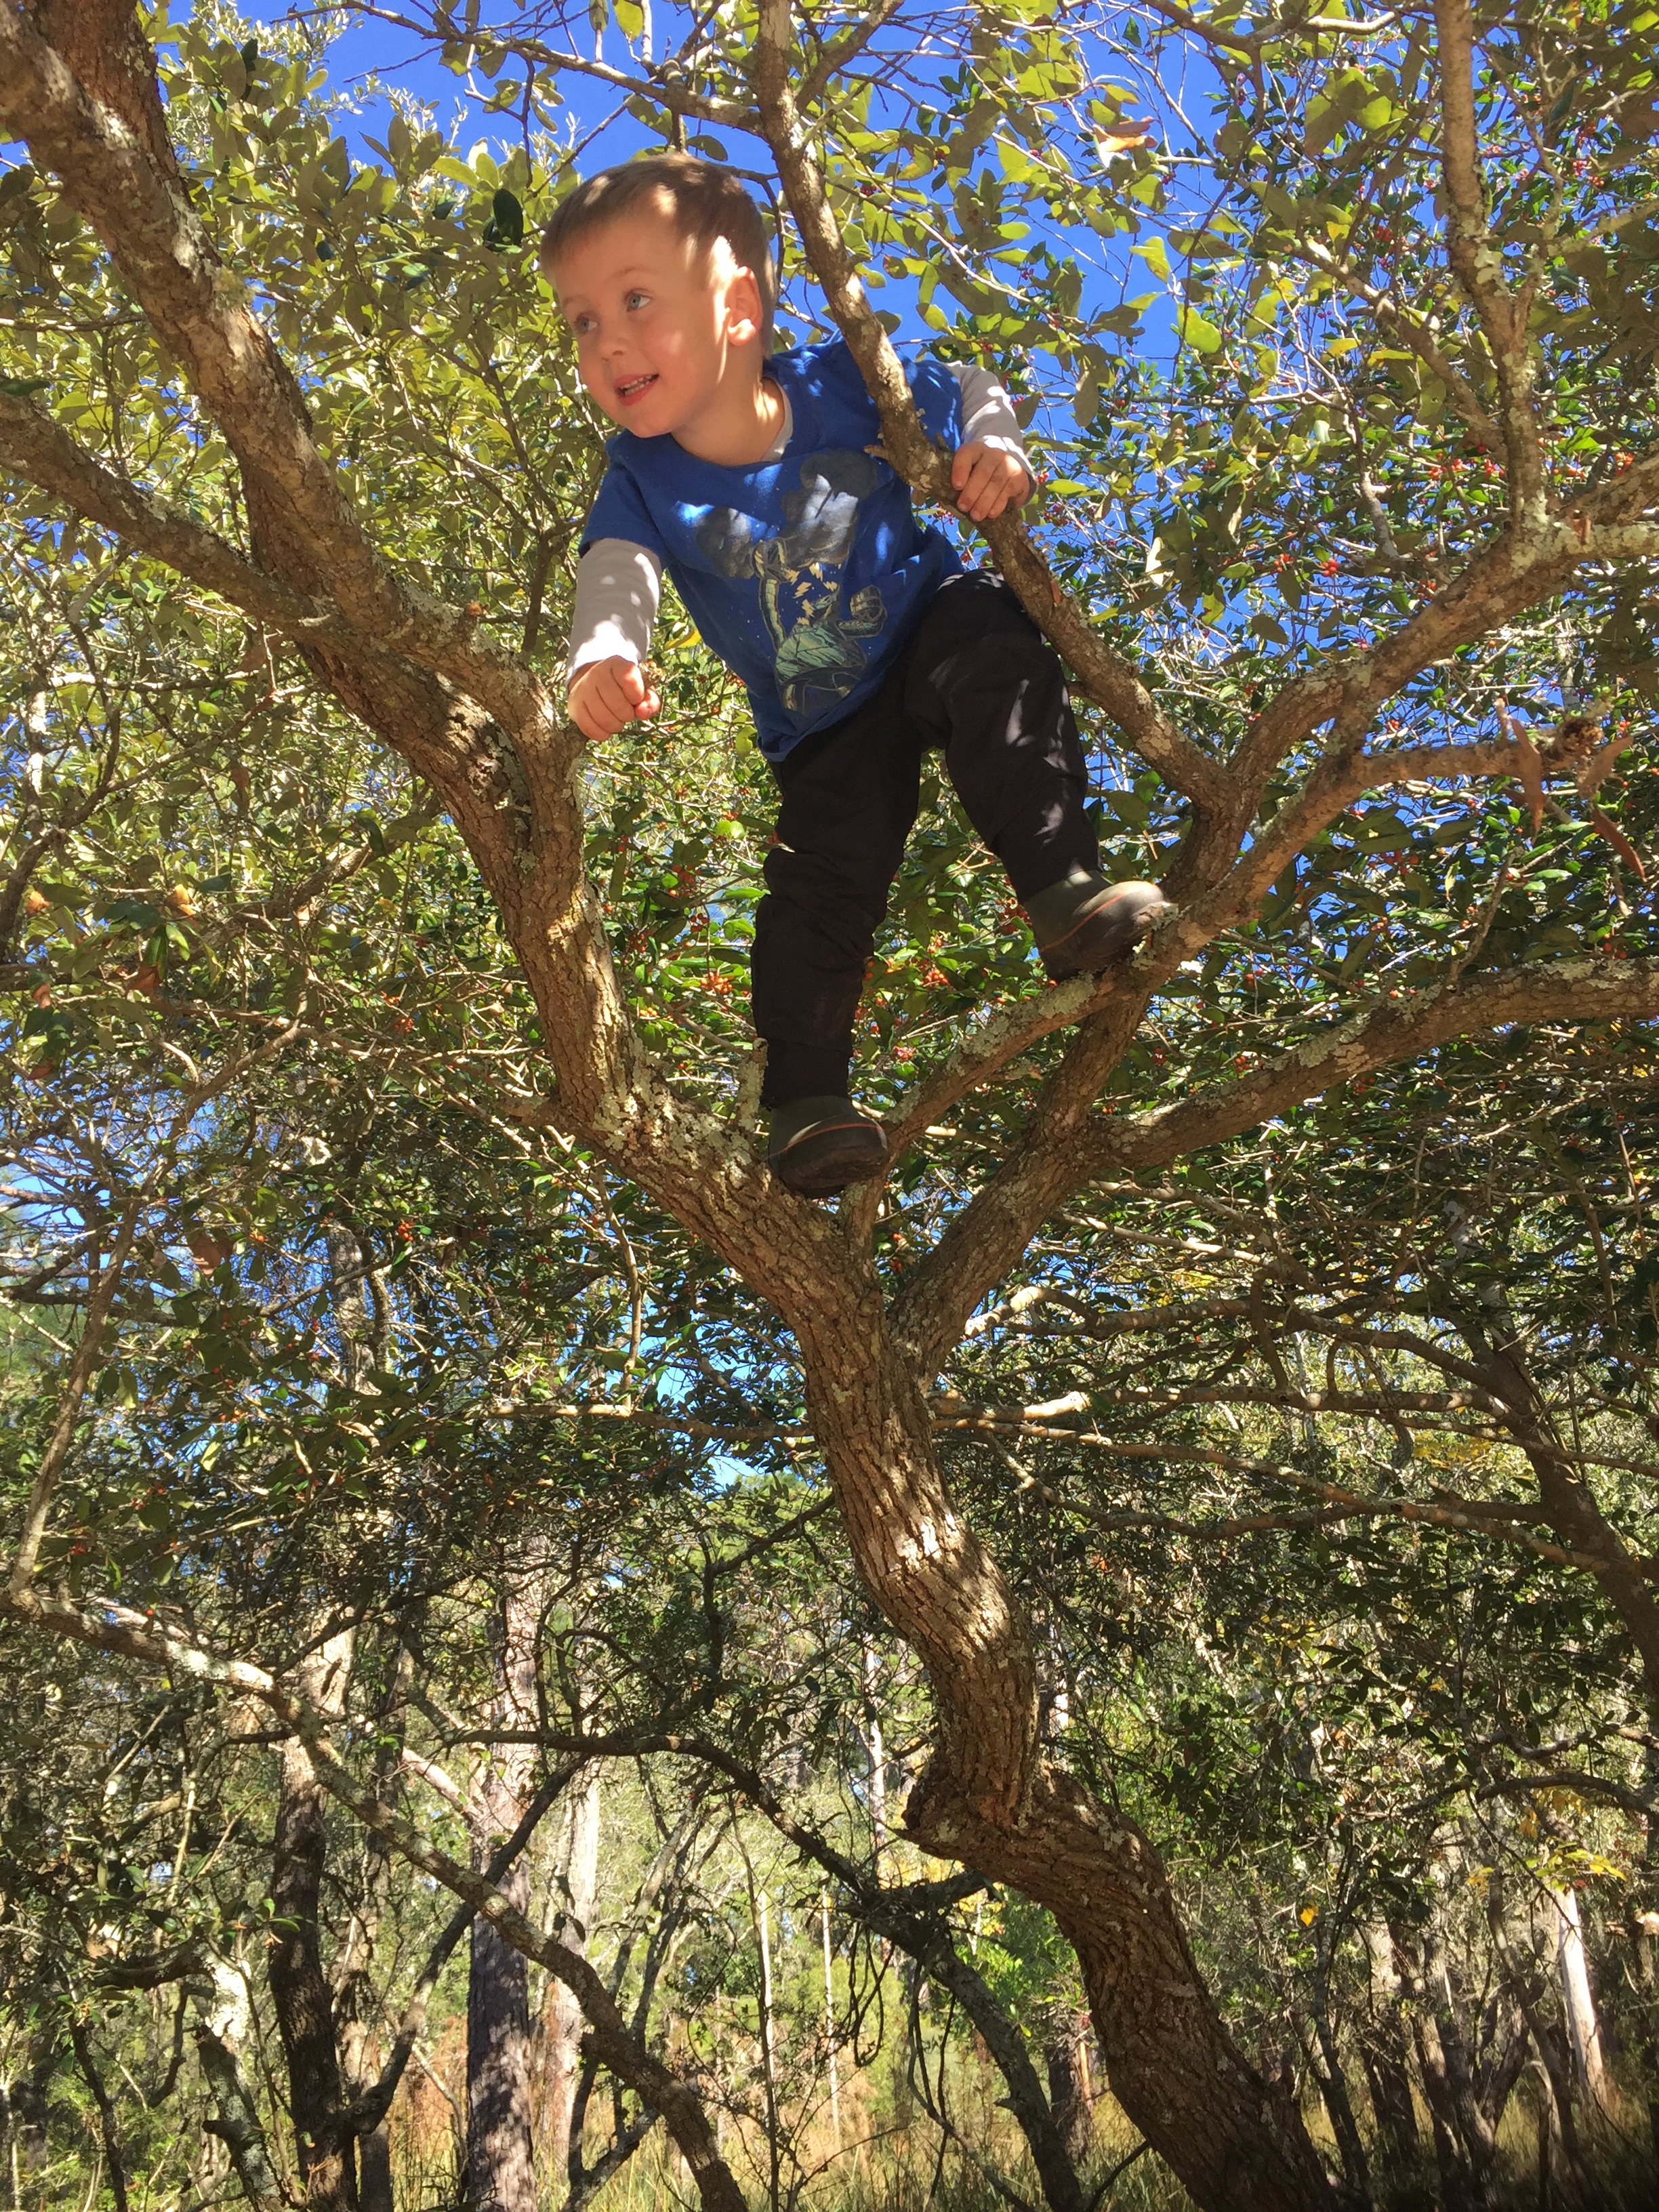 Climbing trees!